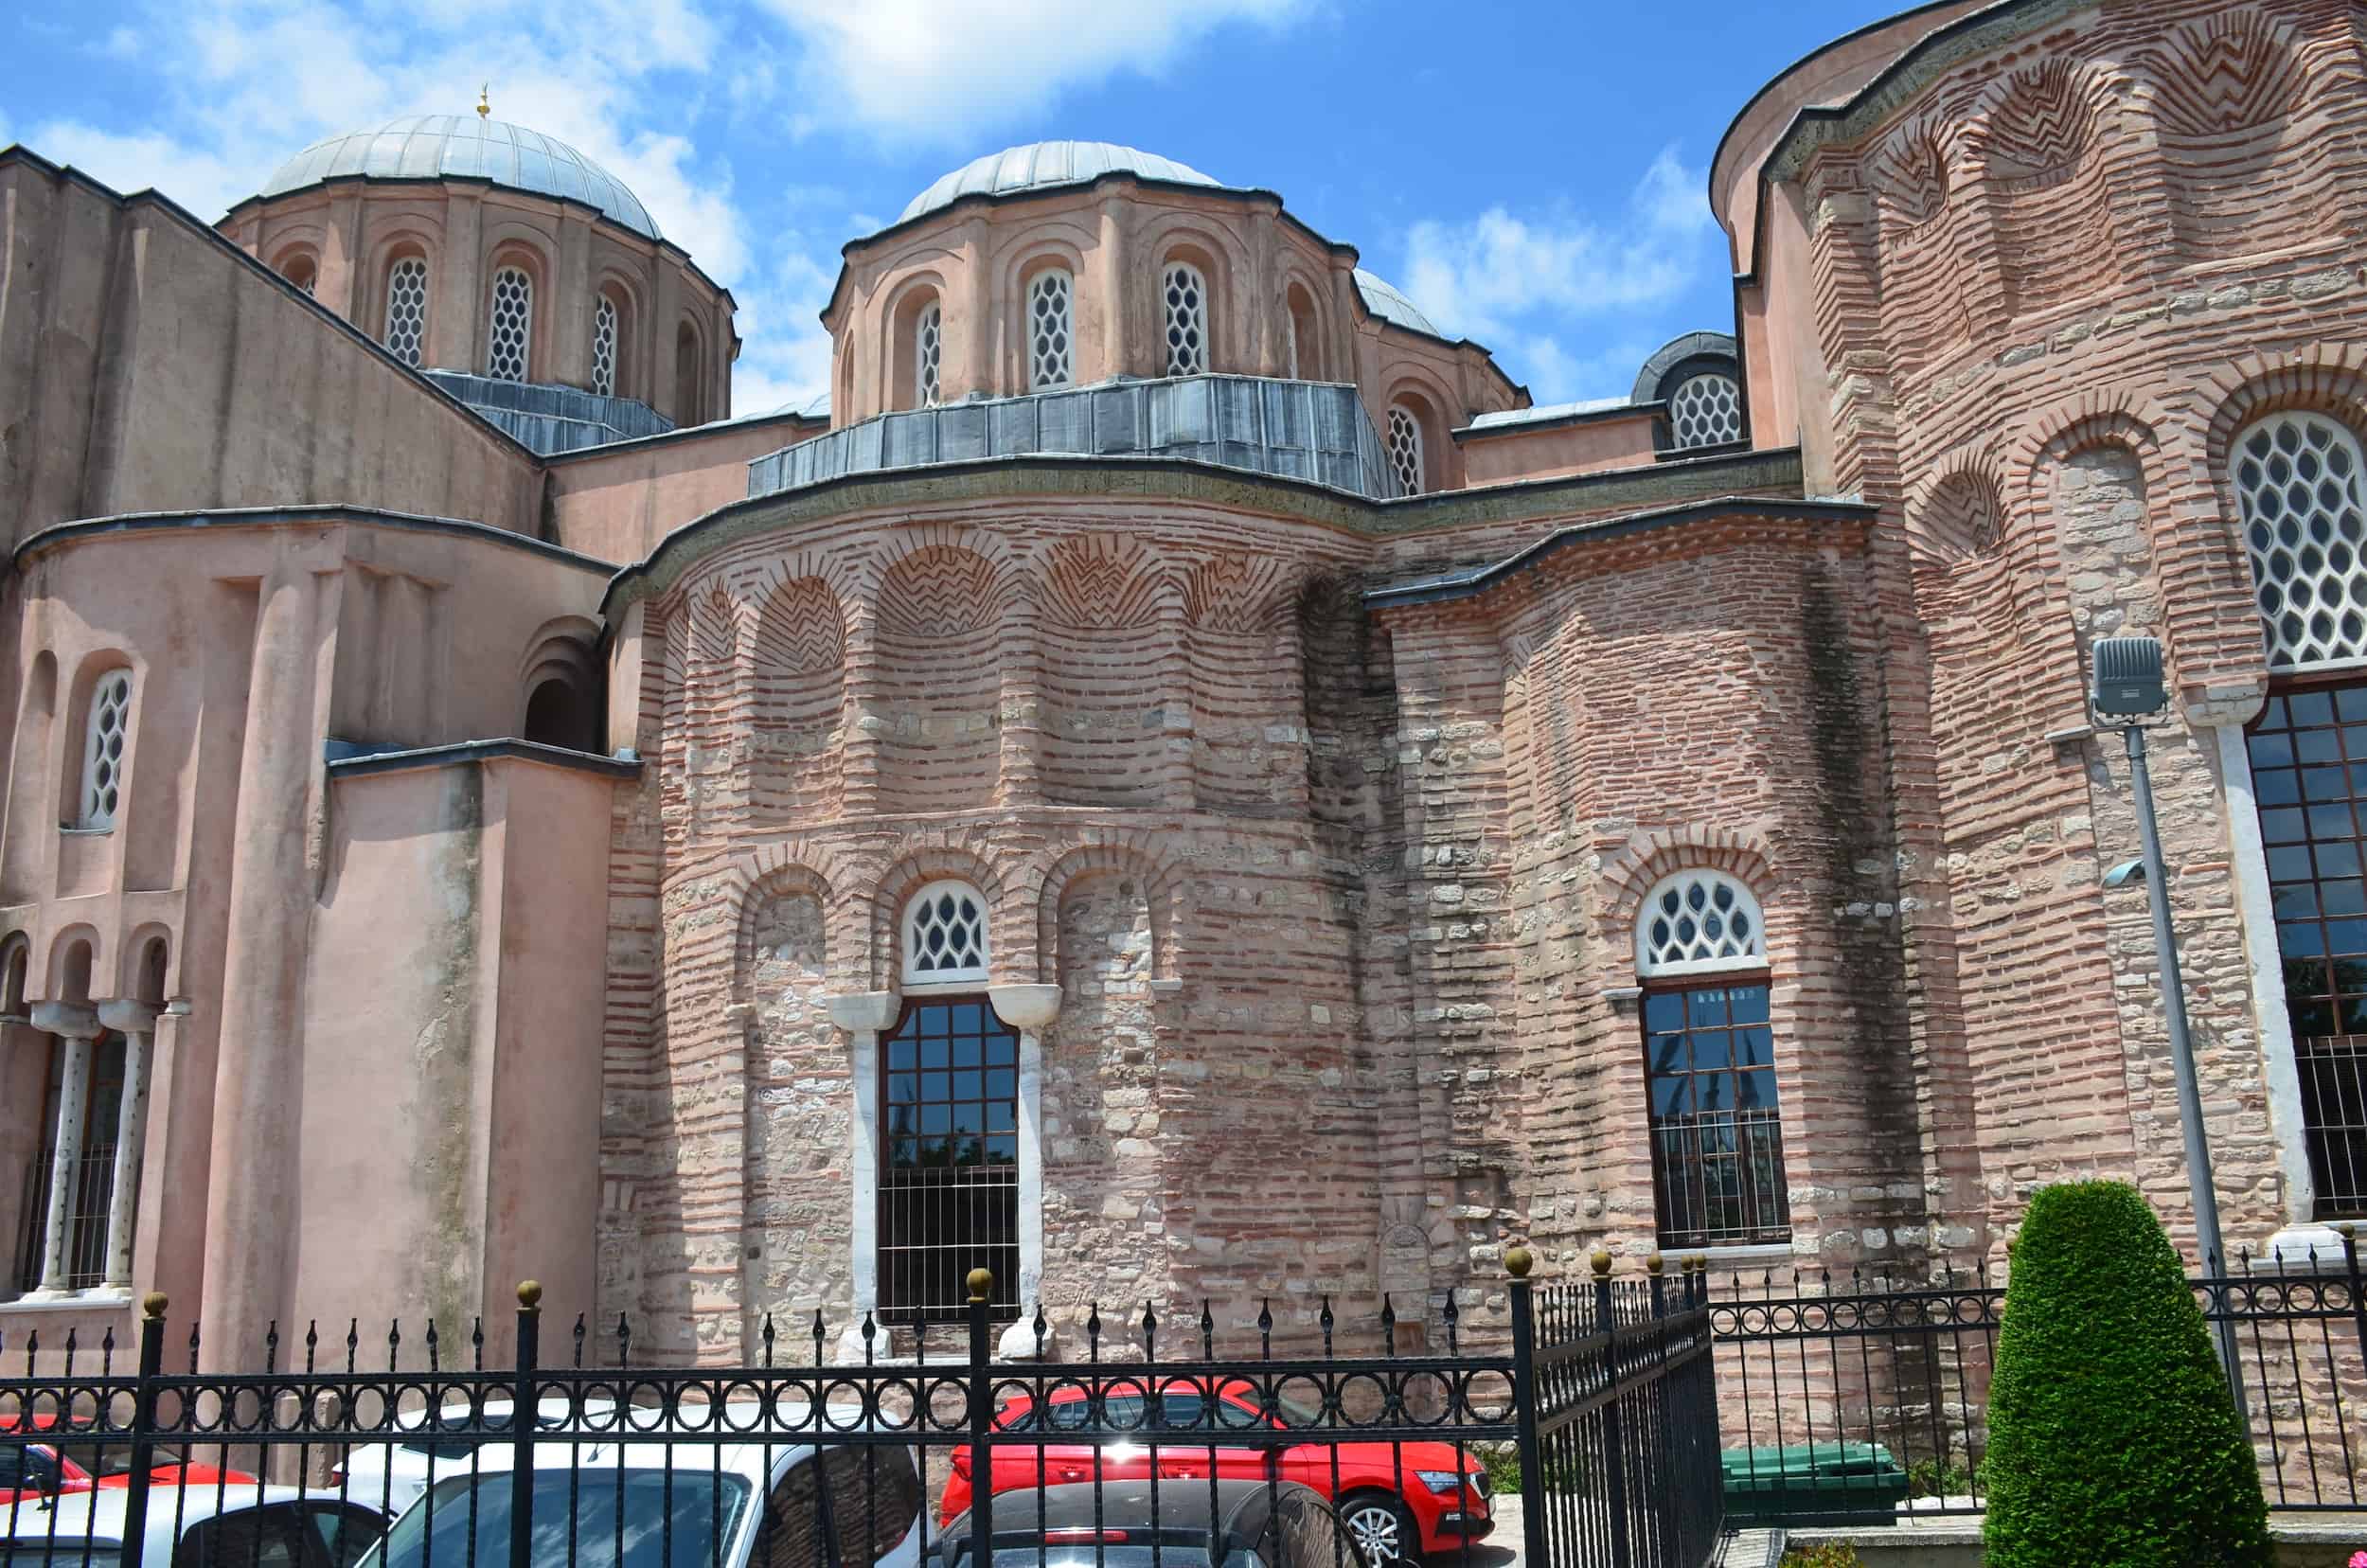 Imperial Chapel of the Zeyrek Mosque in Zeyrek, Istanbul, Turkey